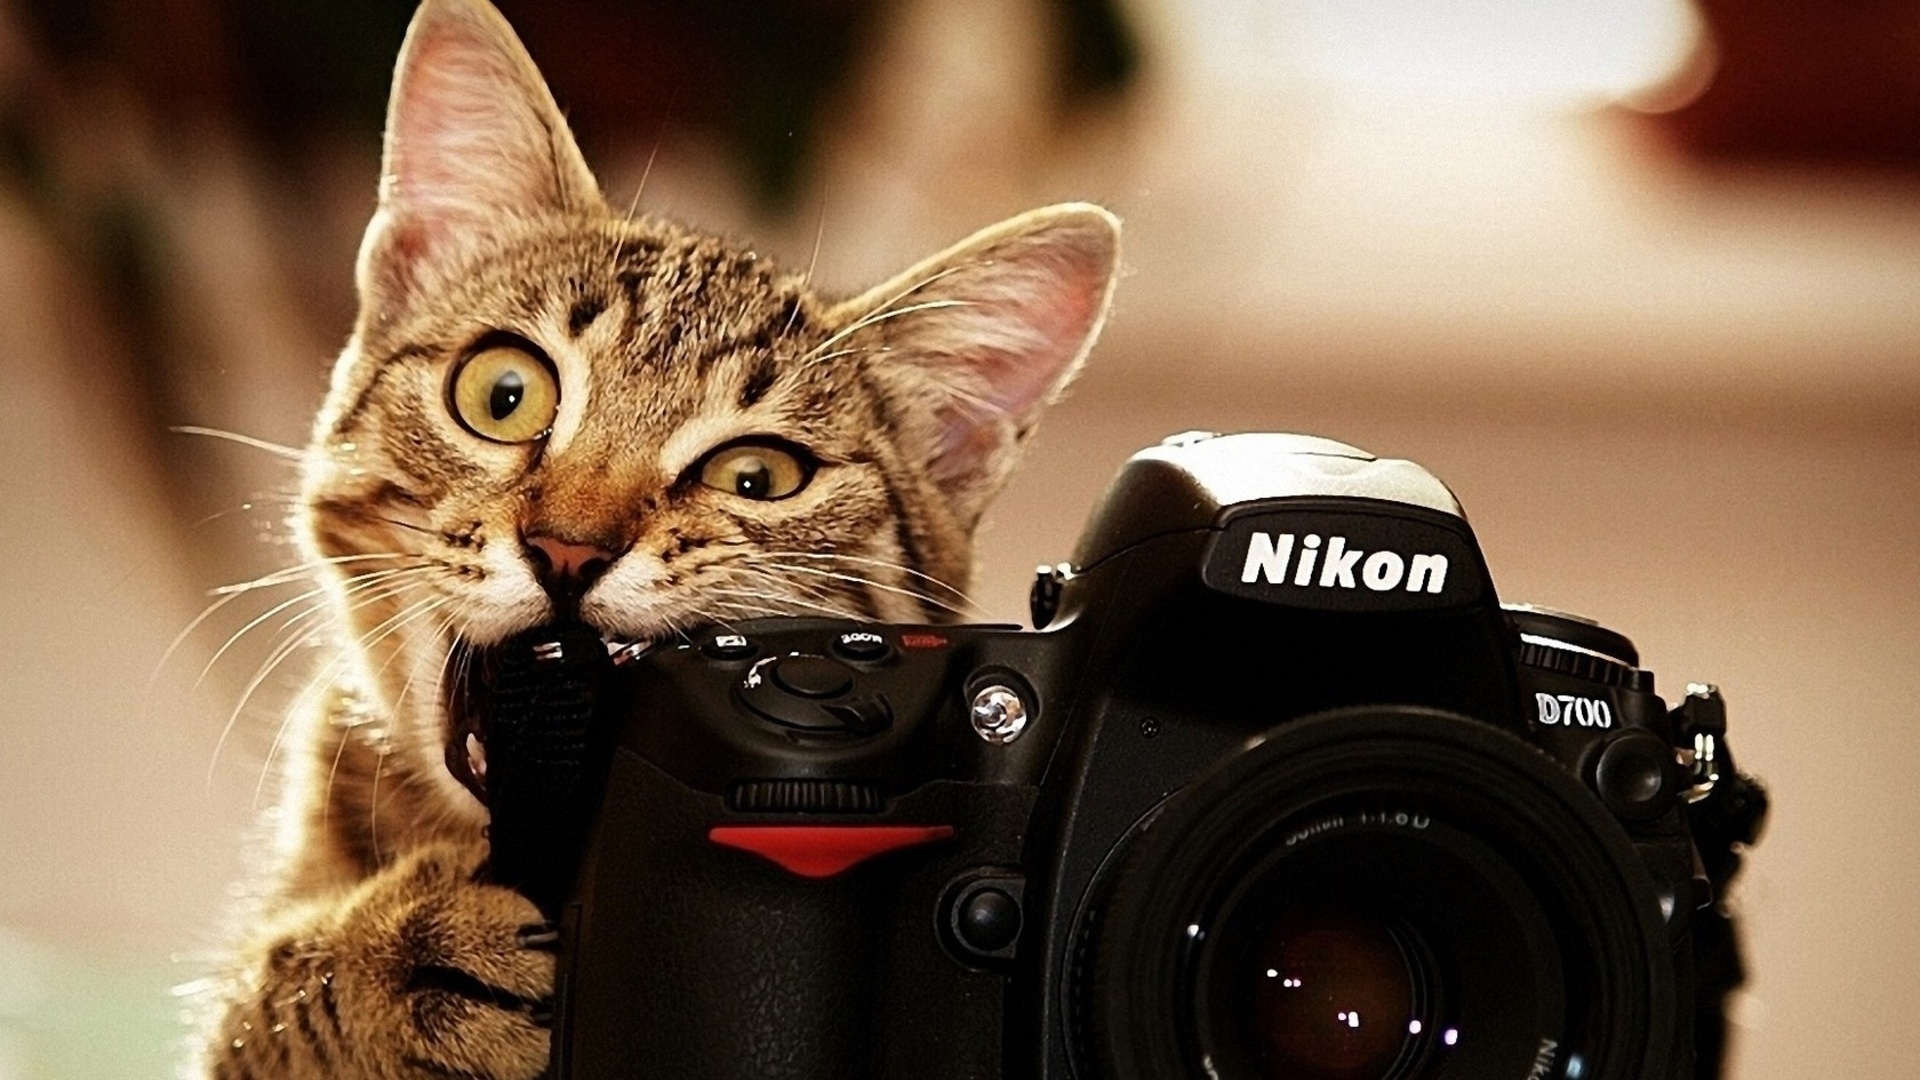 Nikon Cat for 1920 x 1080 HDTV 1080p resolution